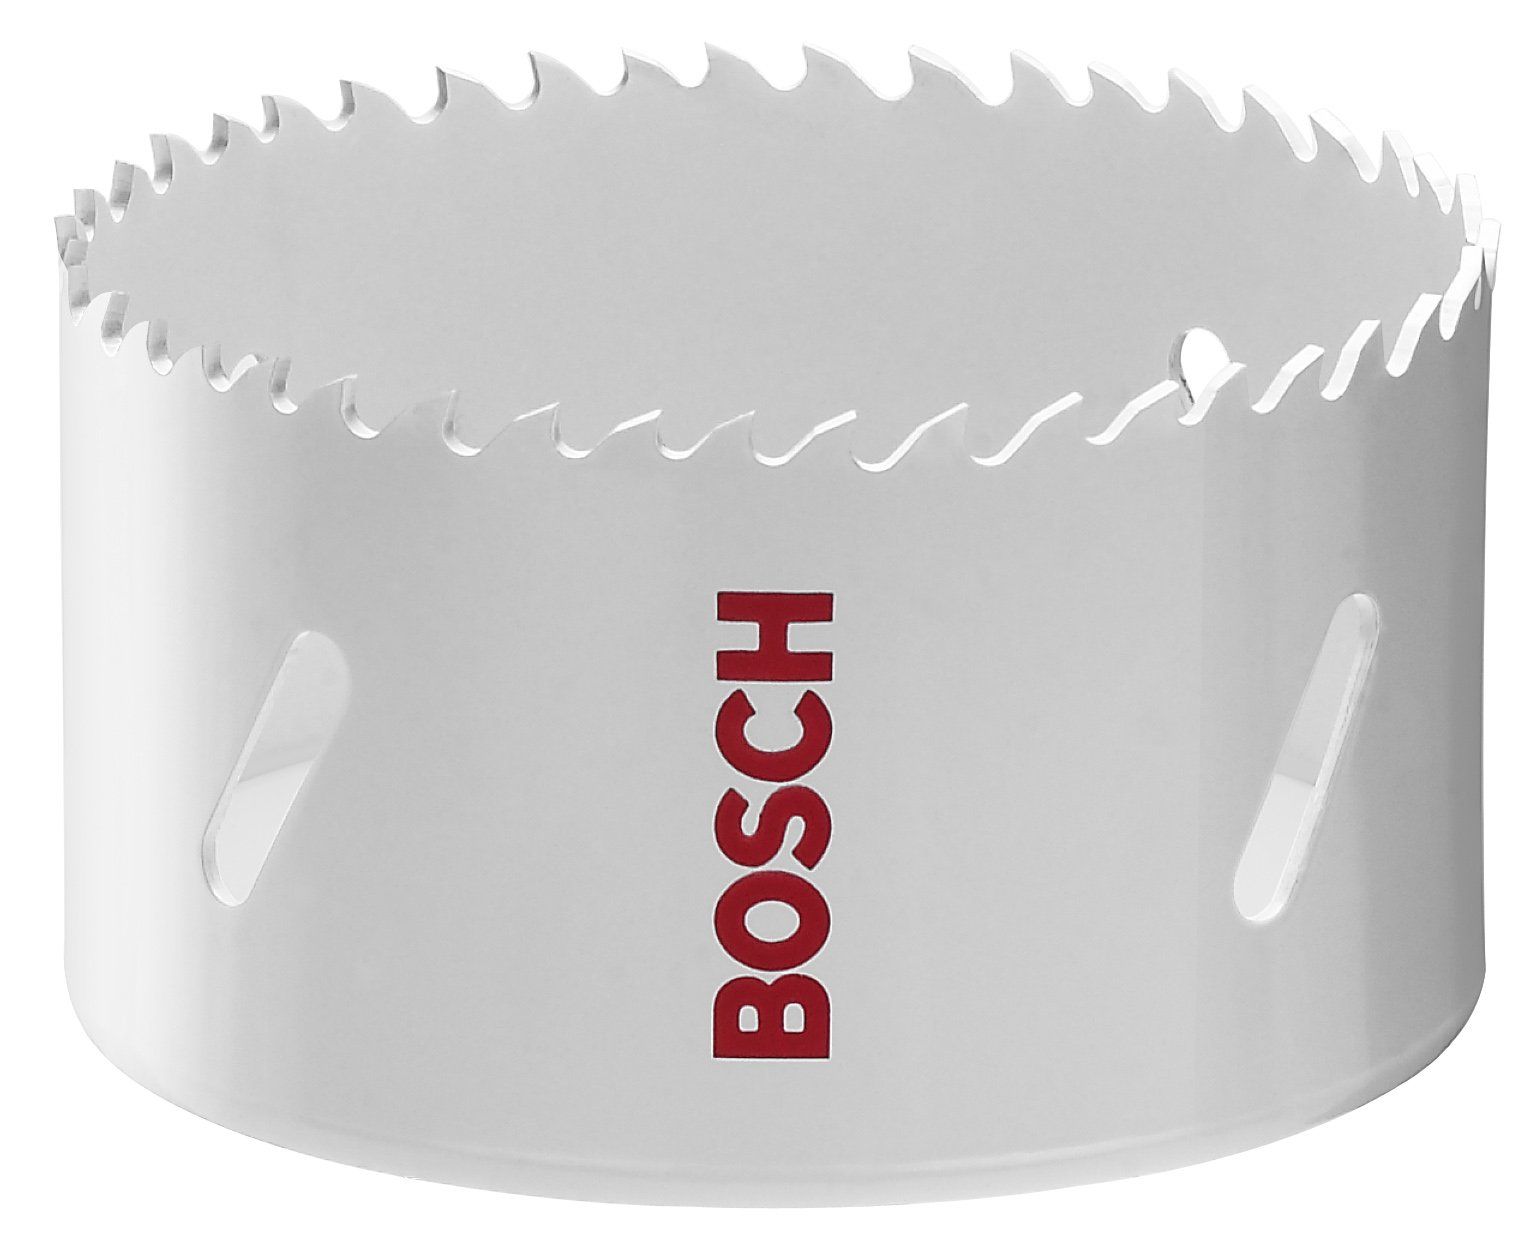 Bosch - HSS Bi-Metal Delik Açma Testeresi (Panç) 86 mm